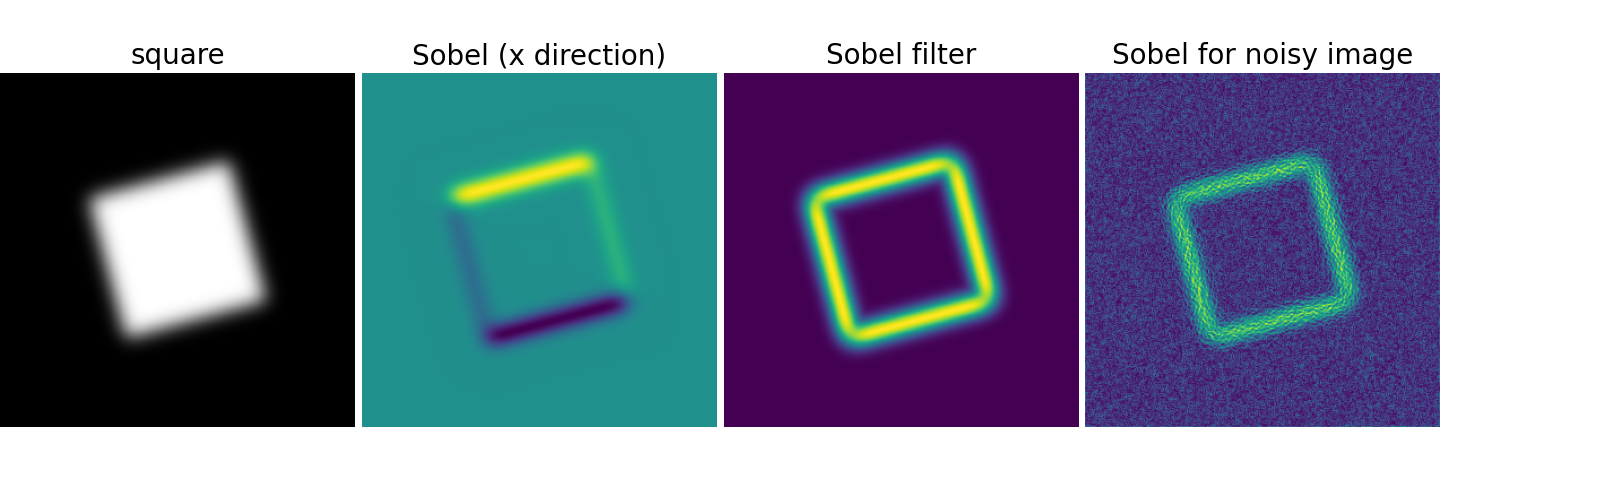 square, Sobel (x direction), Sobel filter, Sobel for noisy image